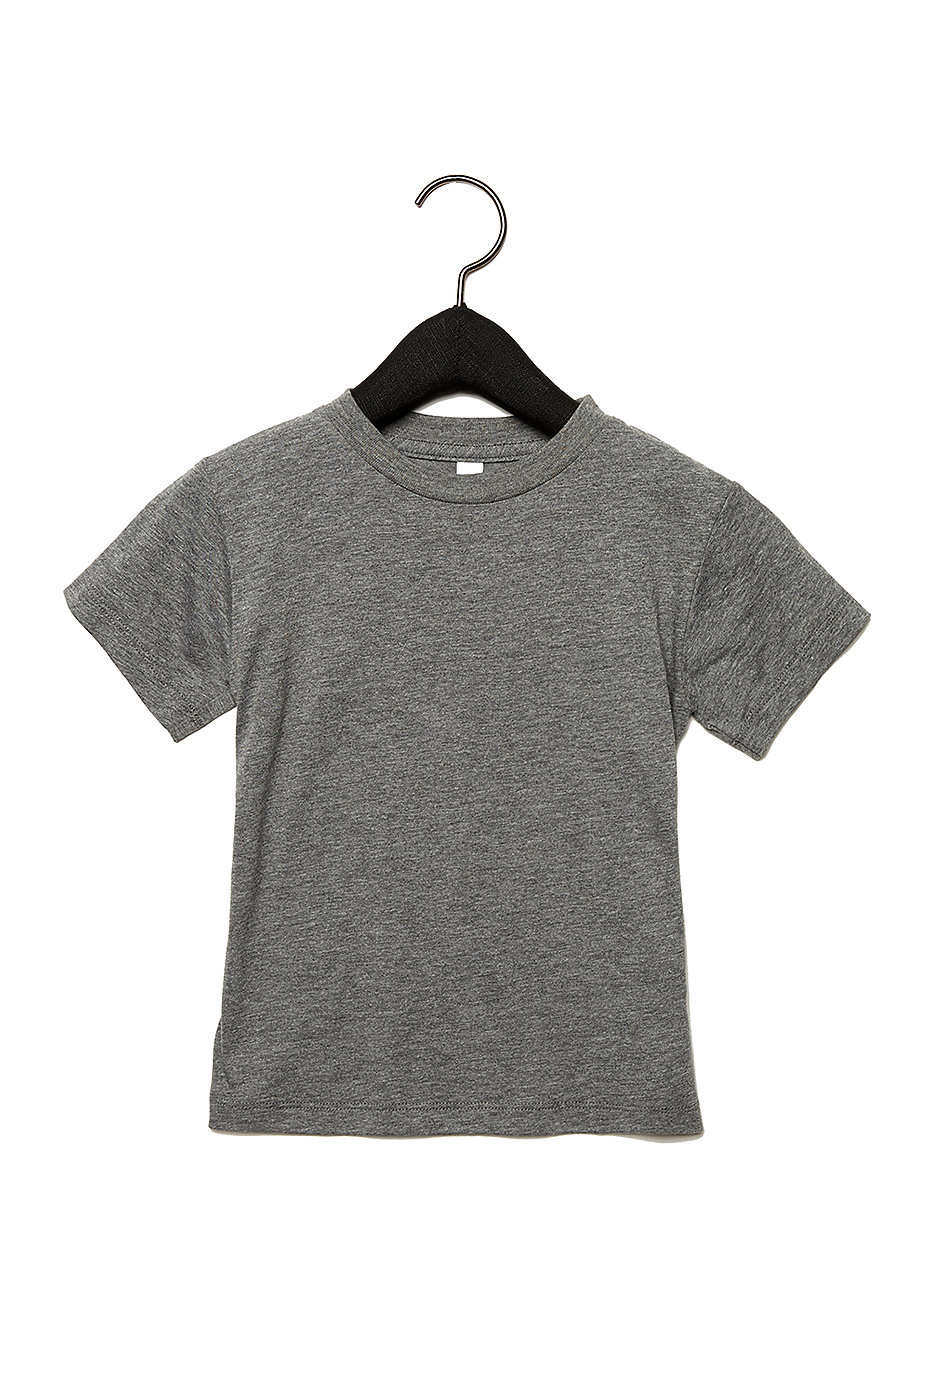 Black Toddler T-shirts – 65% Polyester 35% Cotton Blend 3T